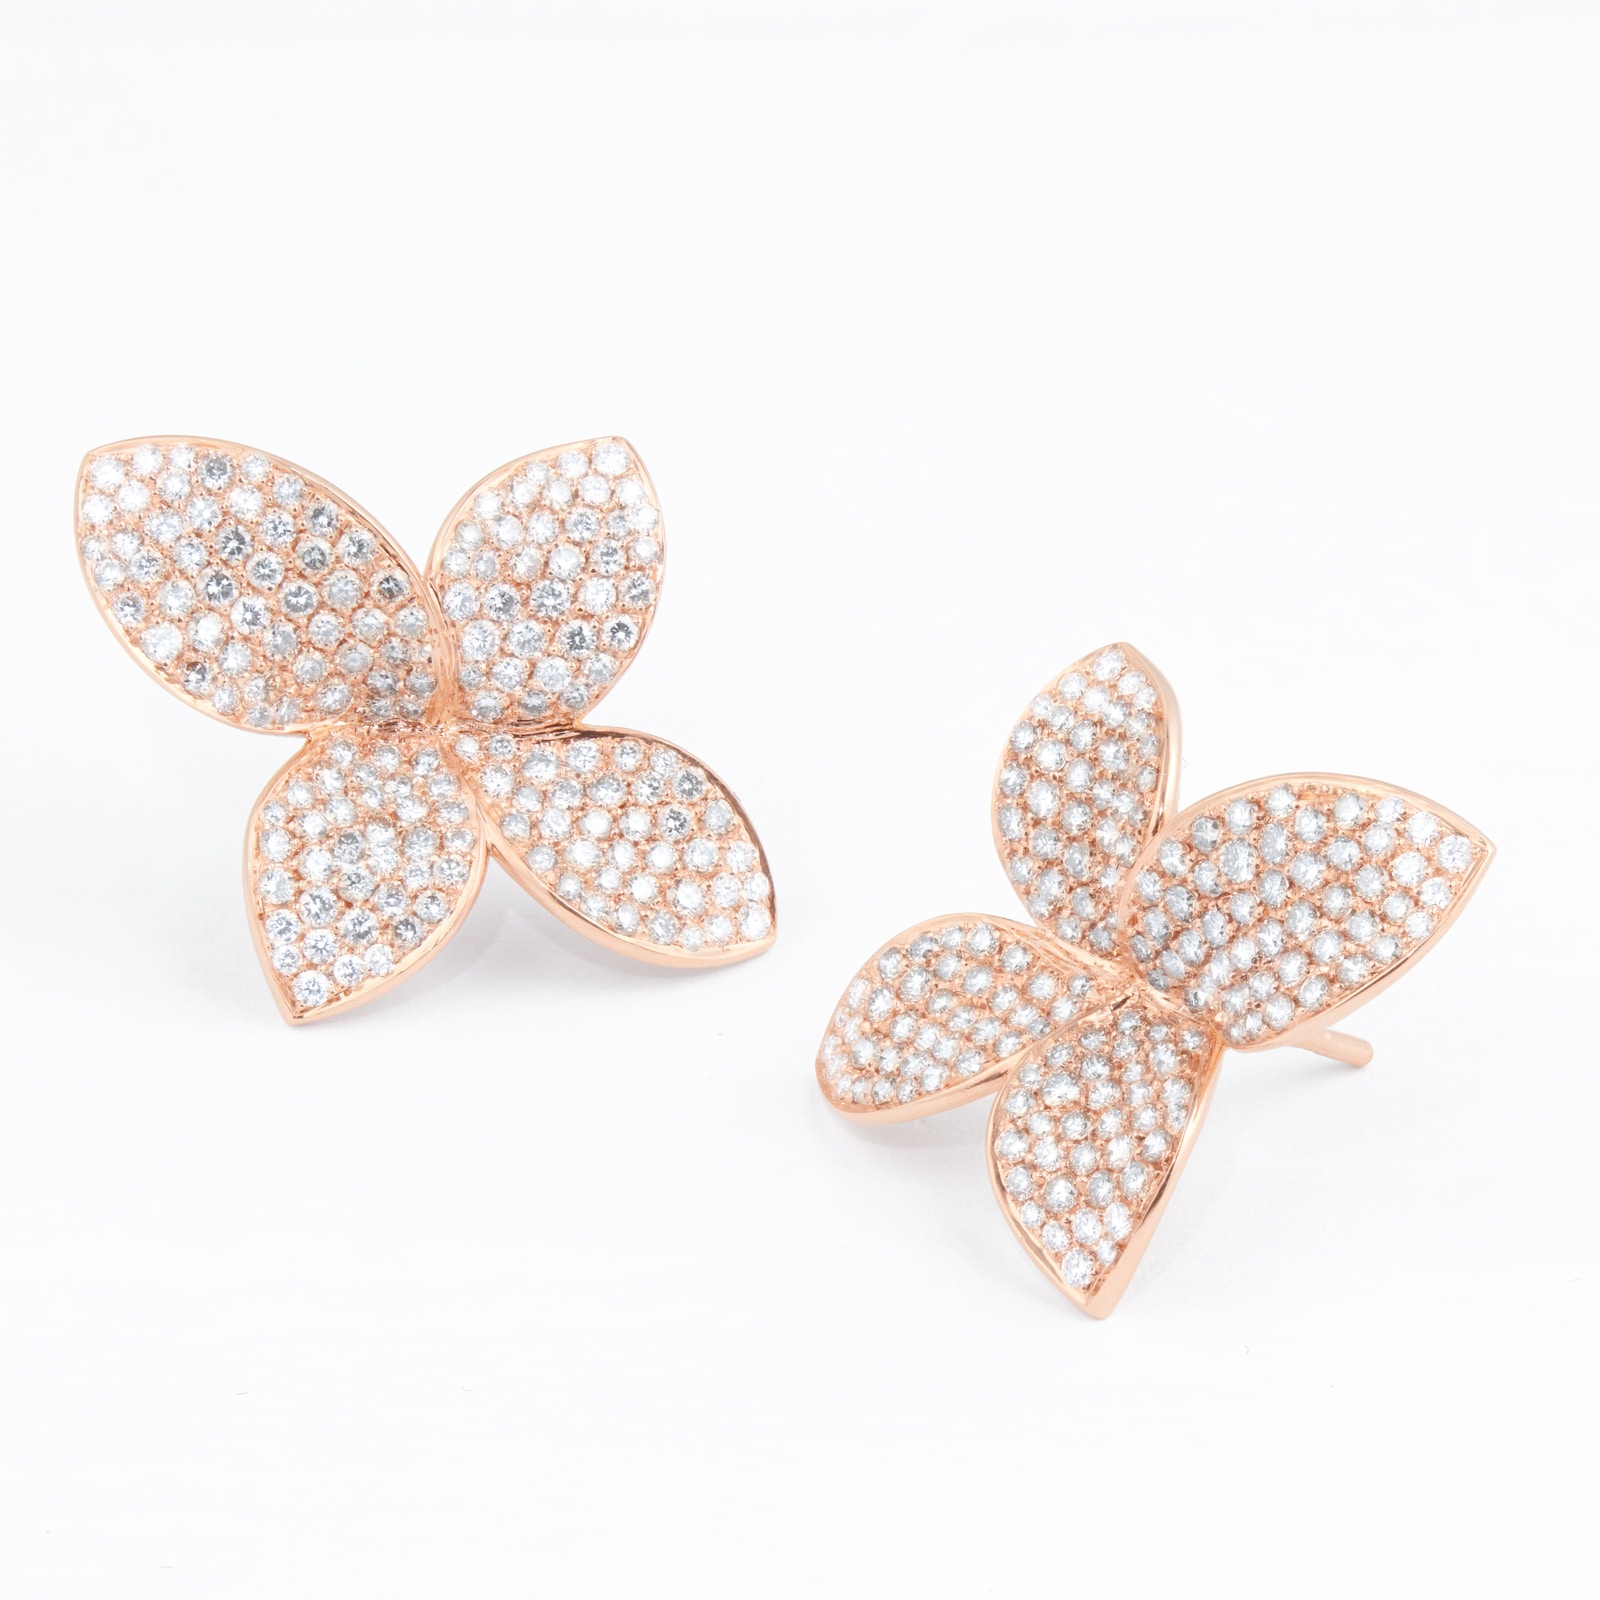 18ct Rose Gold 2.77cttw Diamond Giardini Segreti Earrings